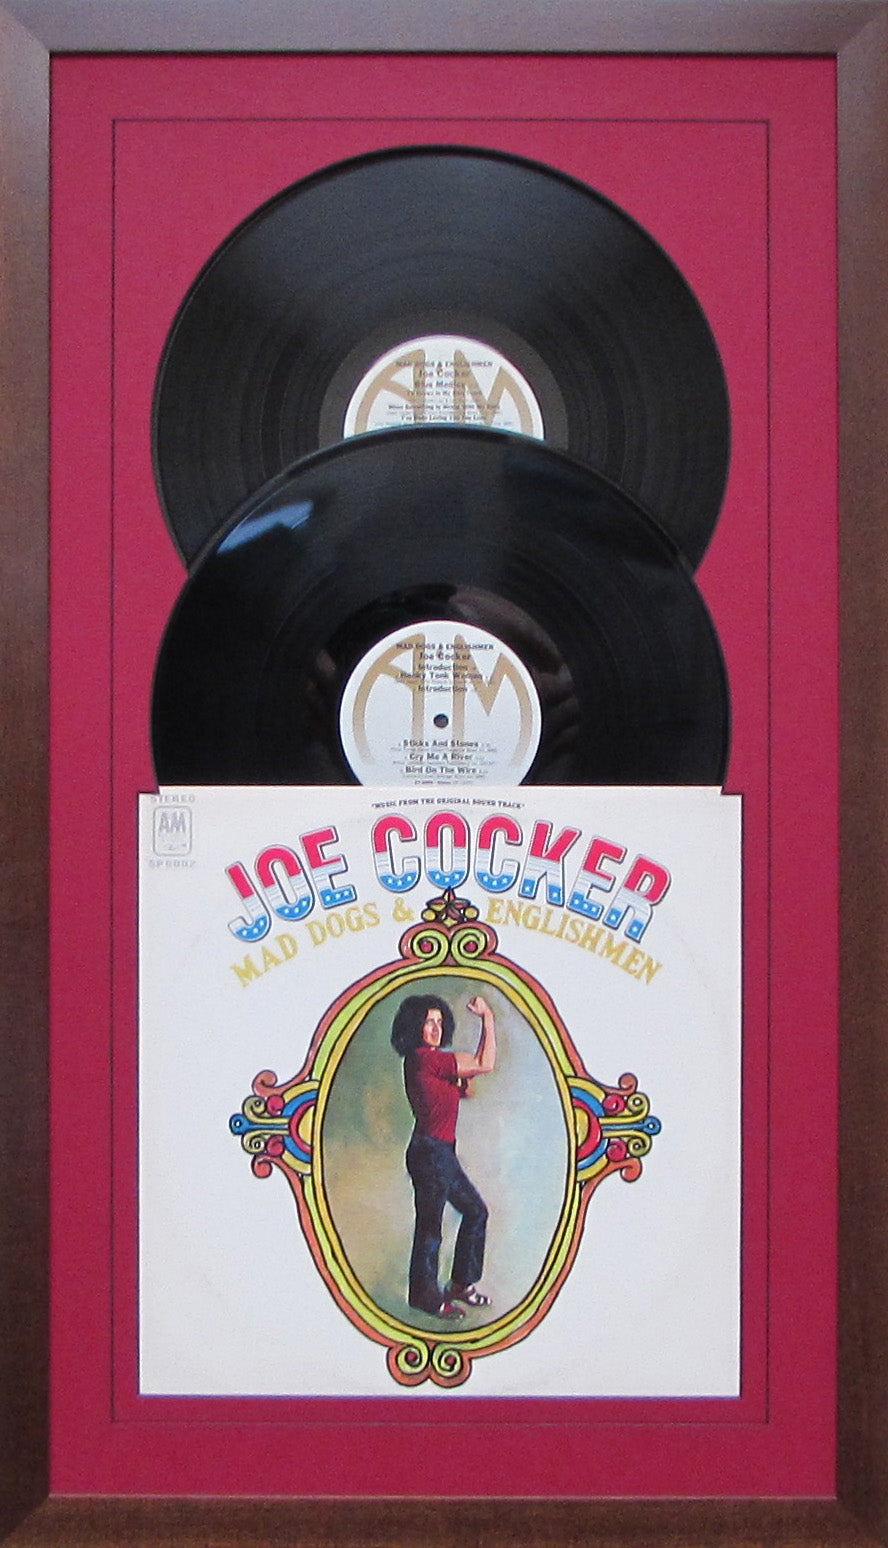 12 LP Double Vinyl Record Album Frame with Sleeve, Jukebox St